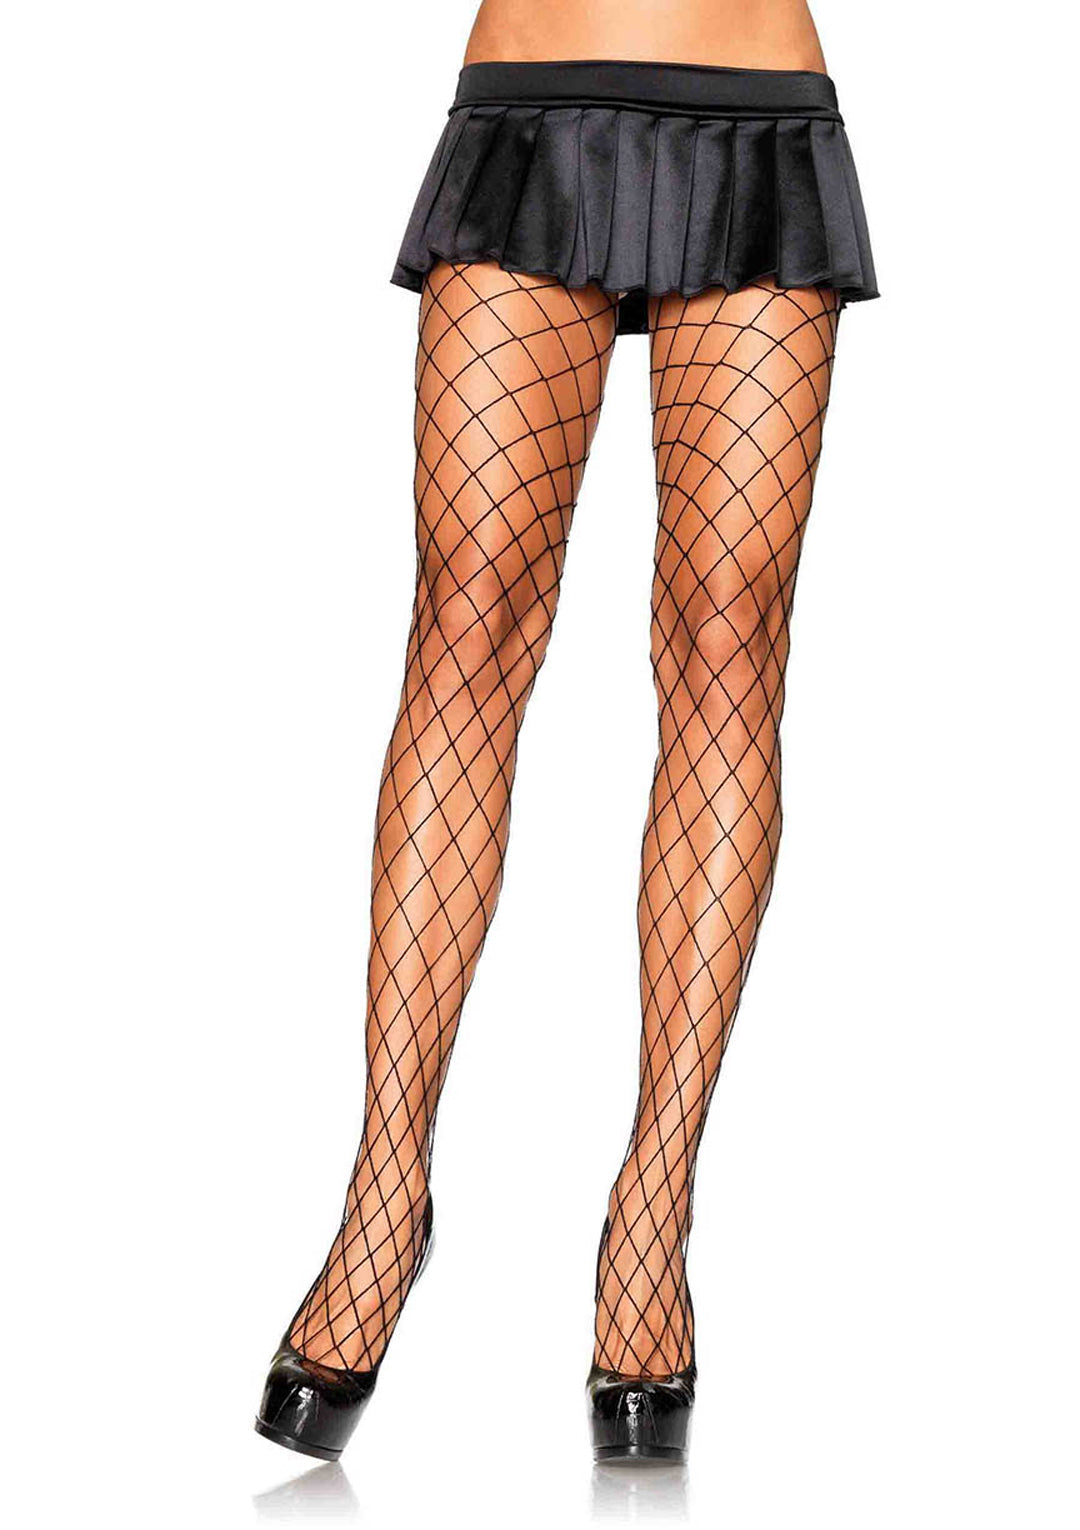 black diamond net pantyhose, shown on model